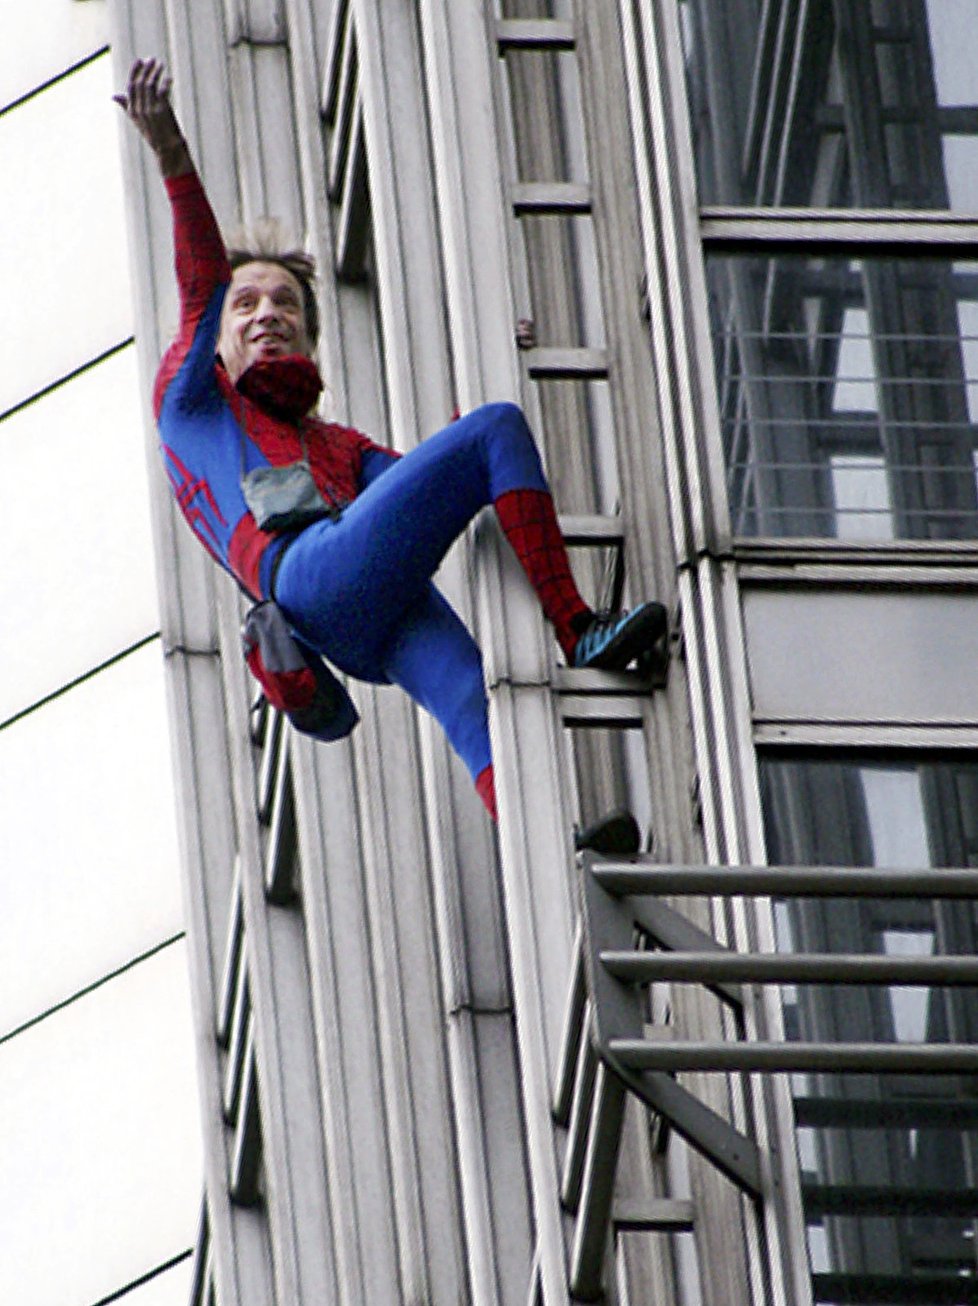 Čas od času na sebe francouzský lezec obleče kostým Spidermana